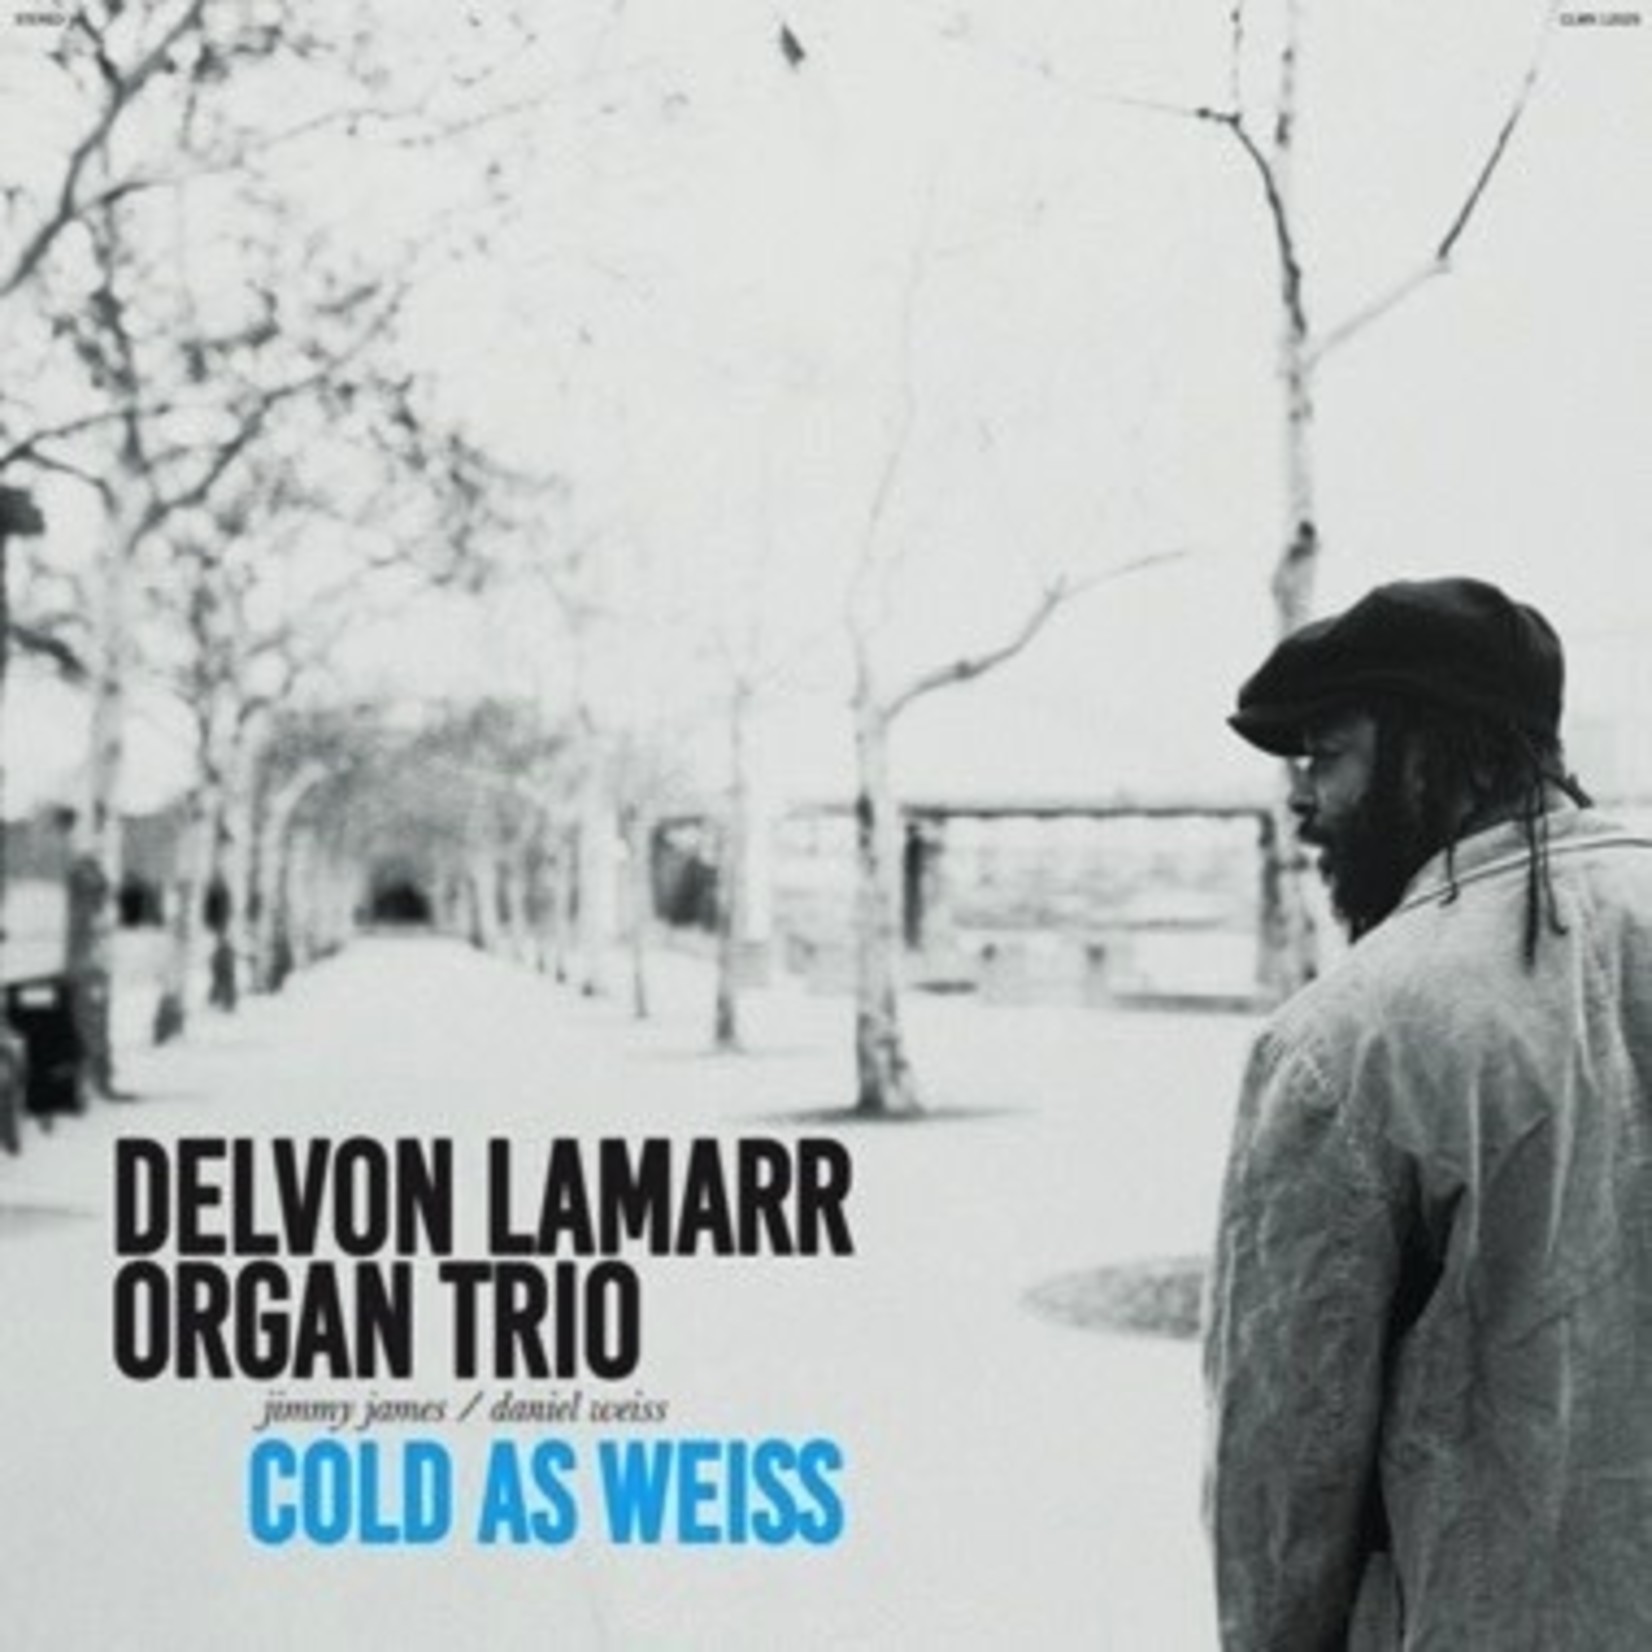 Colemine Delvon Lamarr Organ Trio - Cold as Weiss (LP)